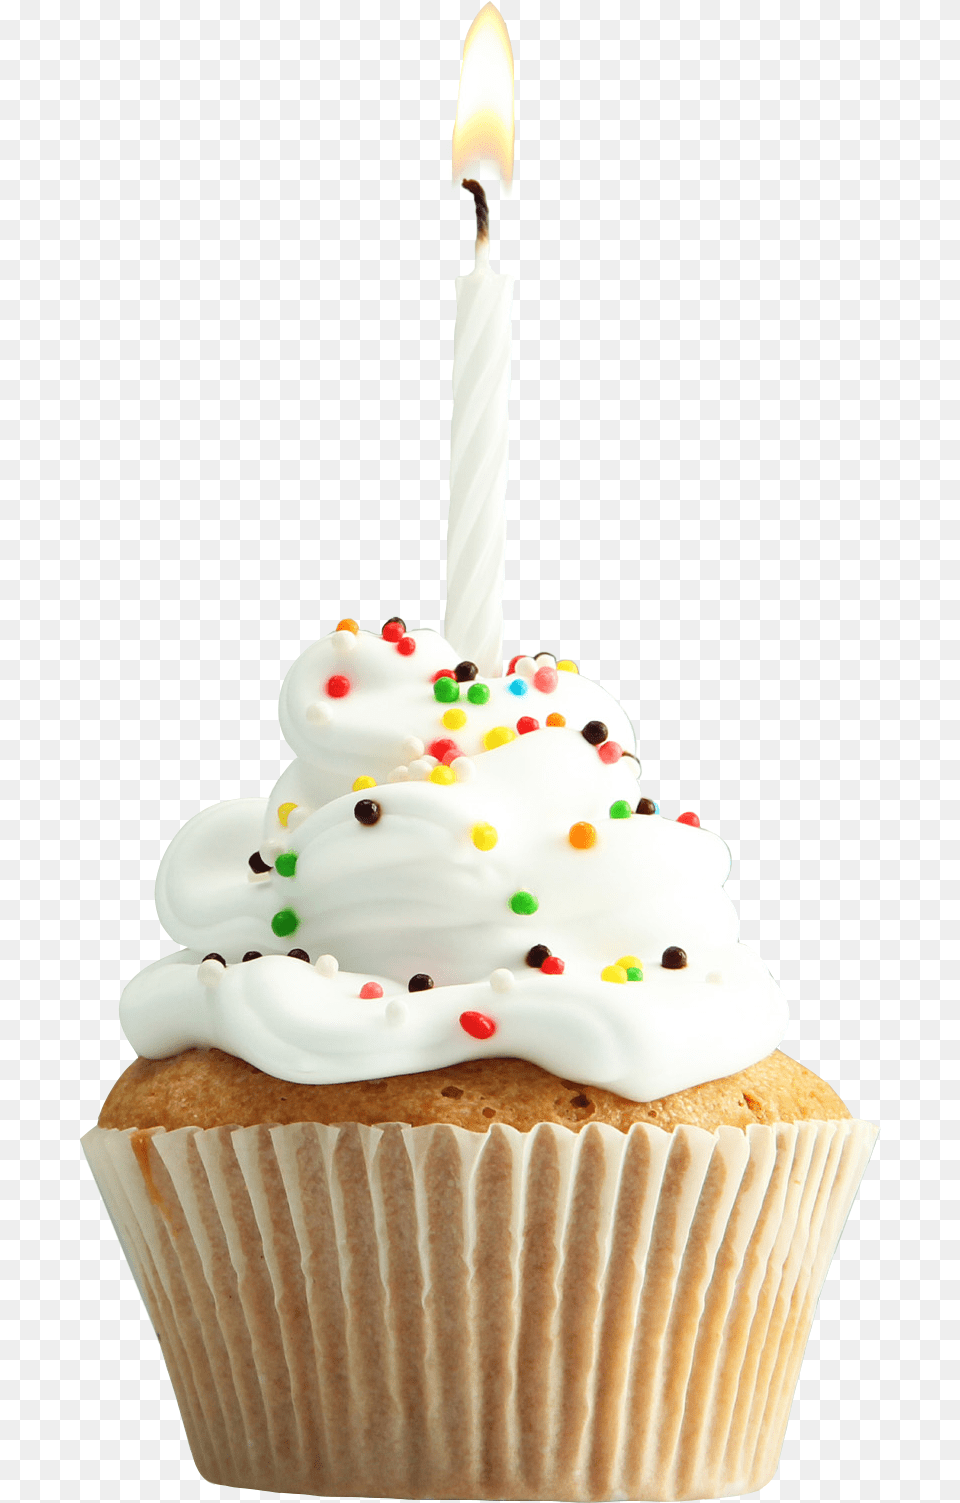 Cupcake Muffin Tart Torte Birthday Cake Cupcake With Candle Background, Birthday Cake, Cream, Dessert, Food Free Transparent Png